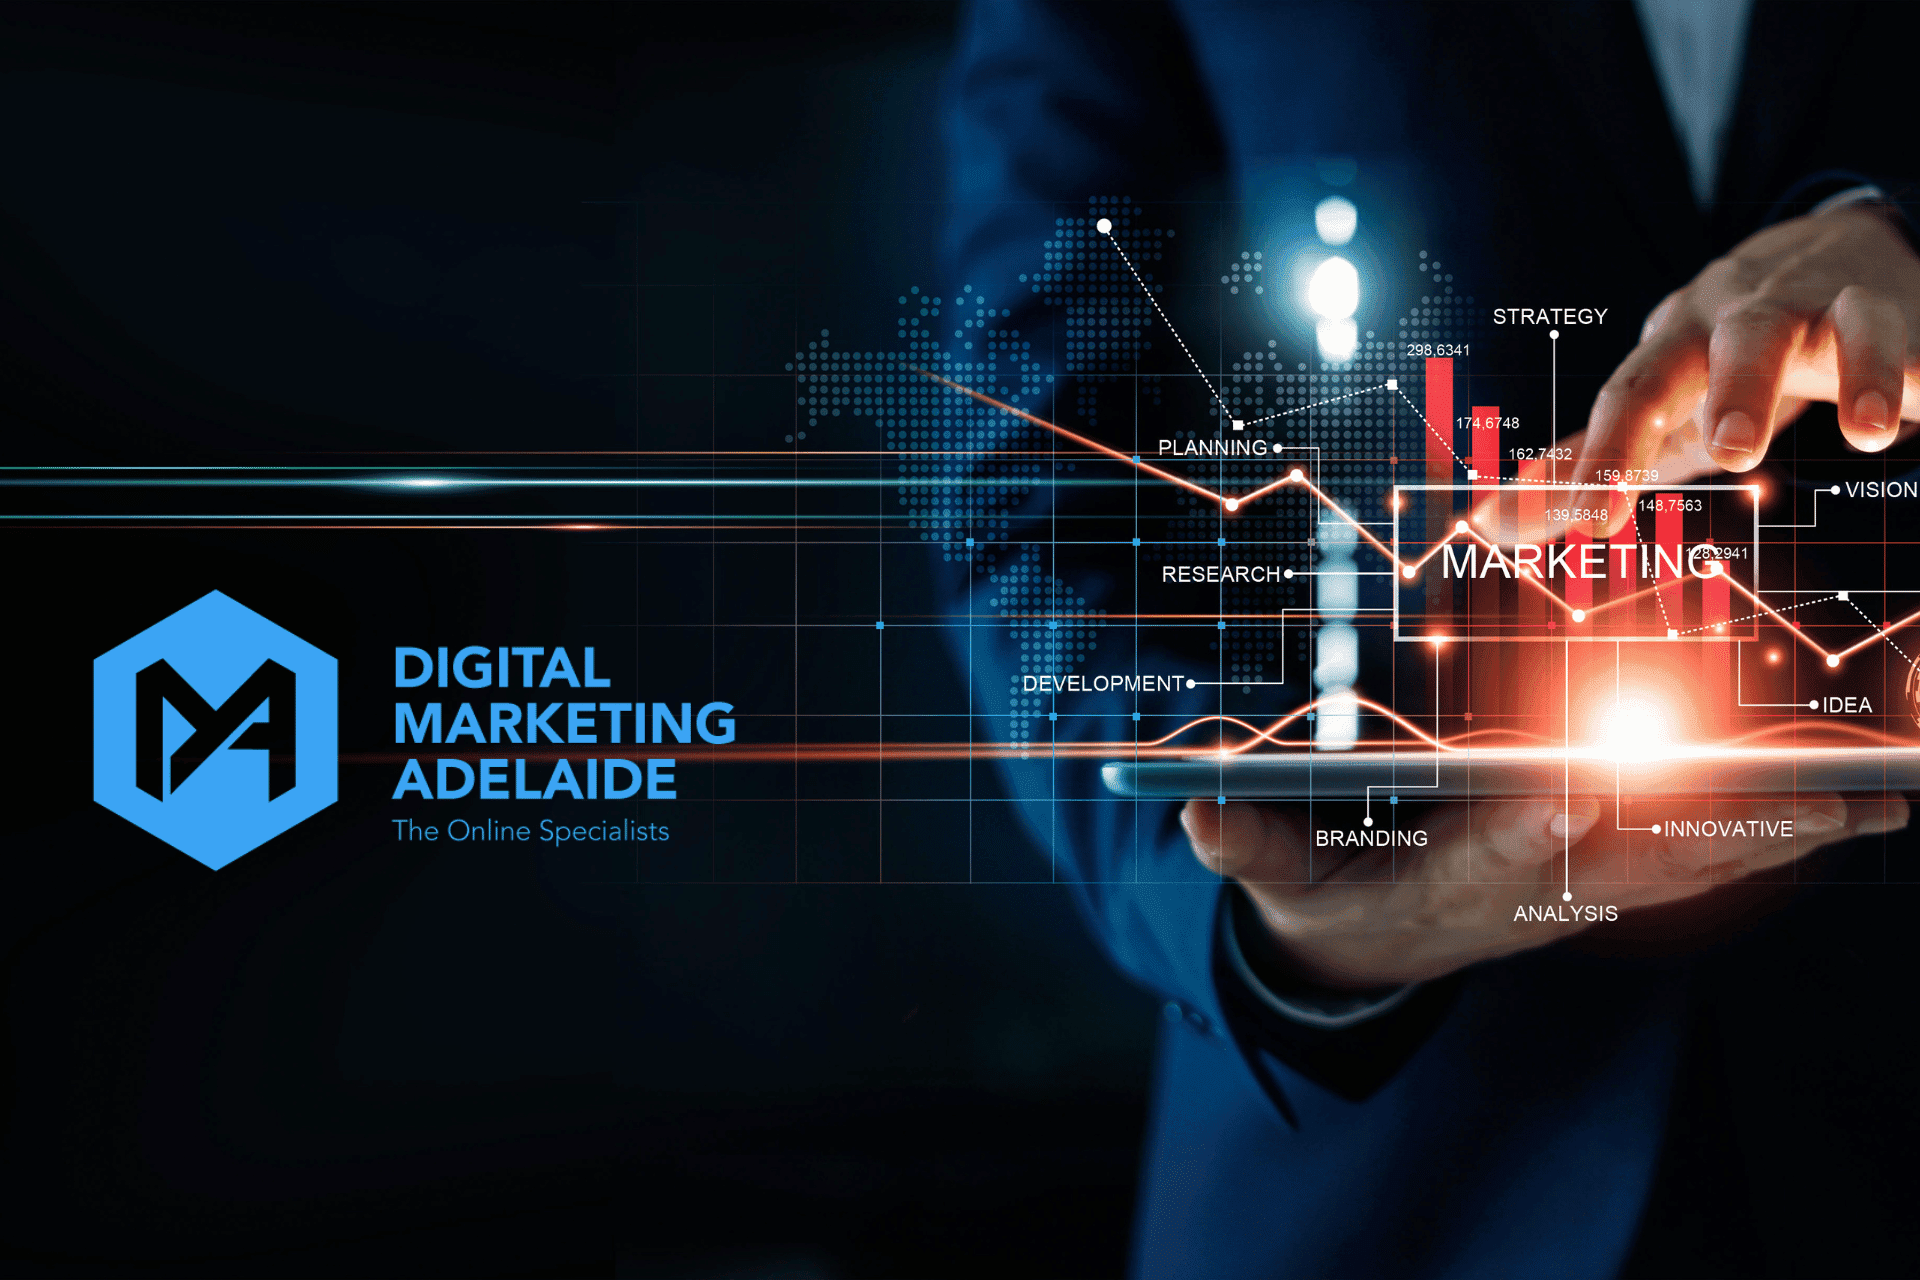 Digital Marketing Adelaide – Services